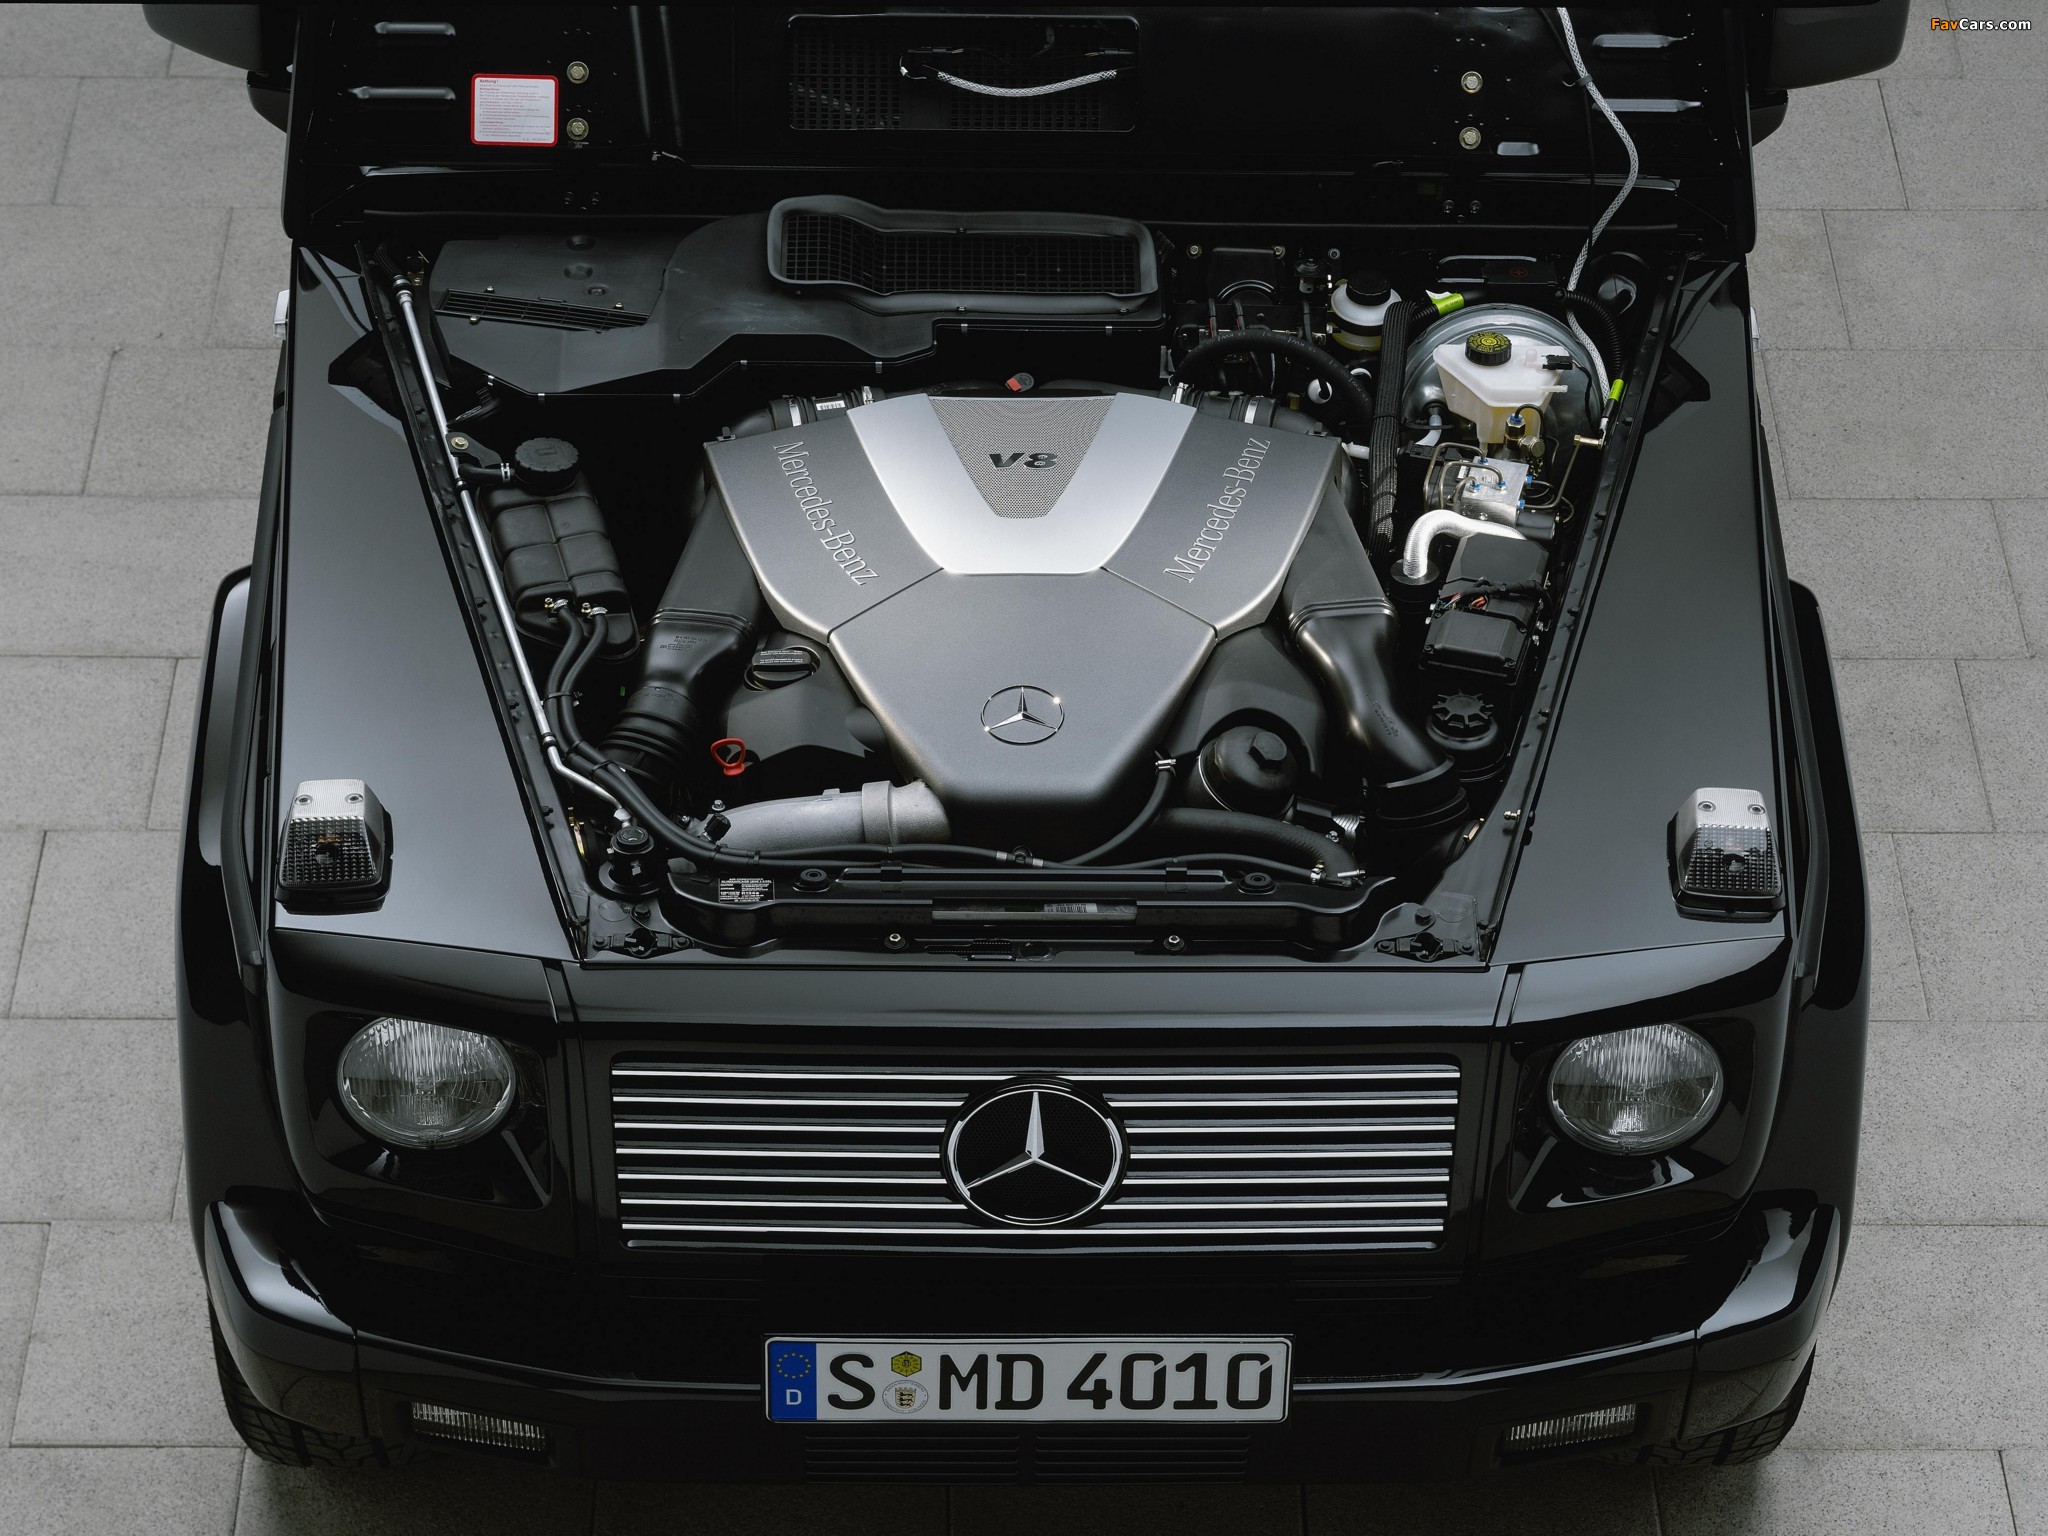 Мотор гелендваген. Mercedes Benz g400 CDI. Mercedes w463 мотор. W463 дизель мотор. Mercedes Benz g class 2002 под капотом.